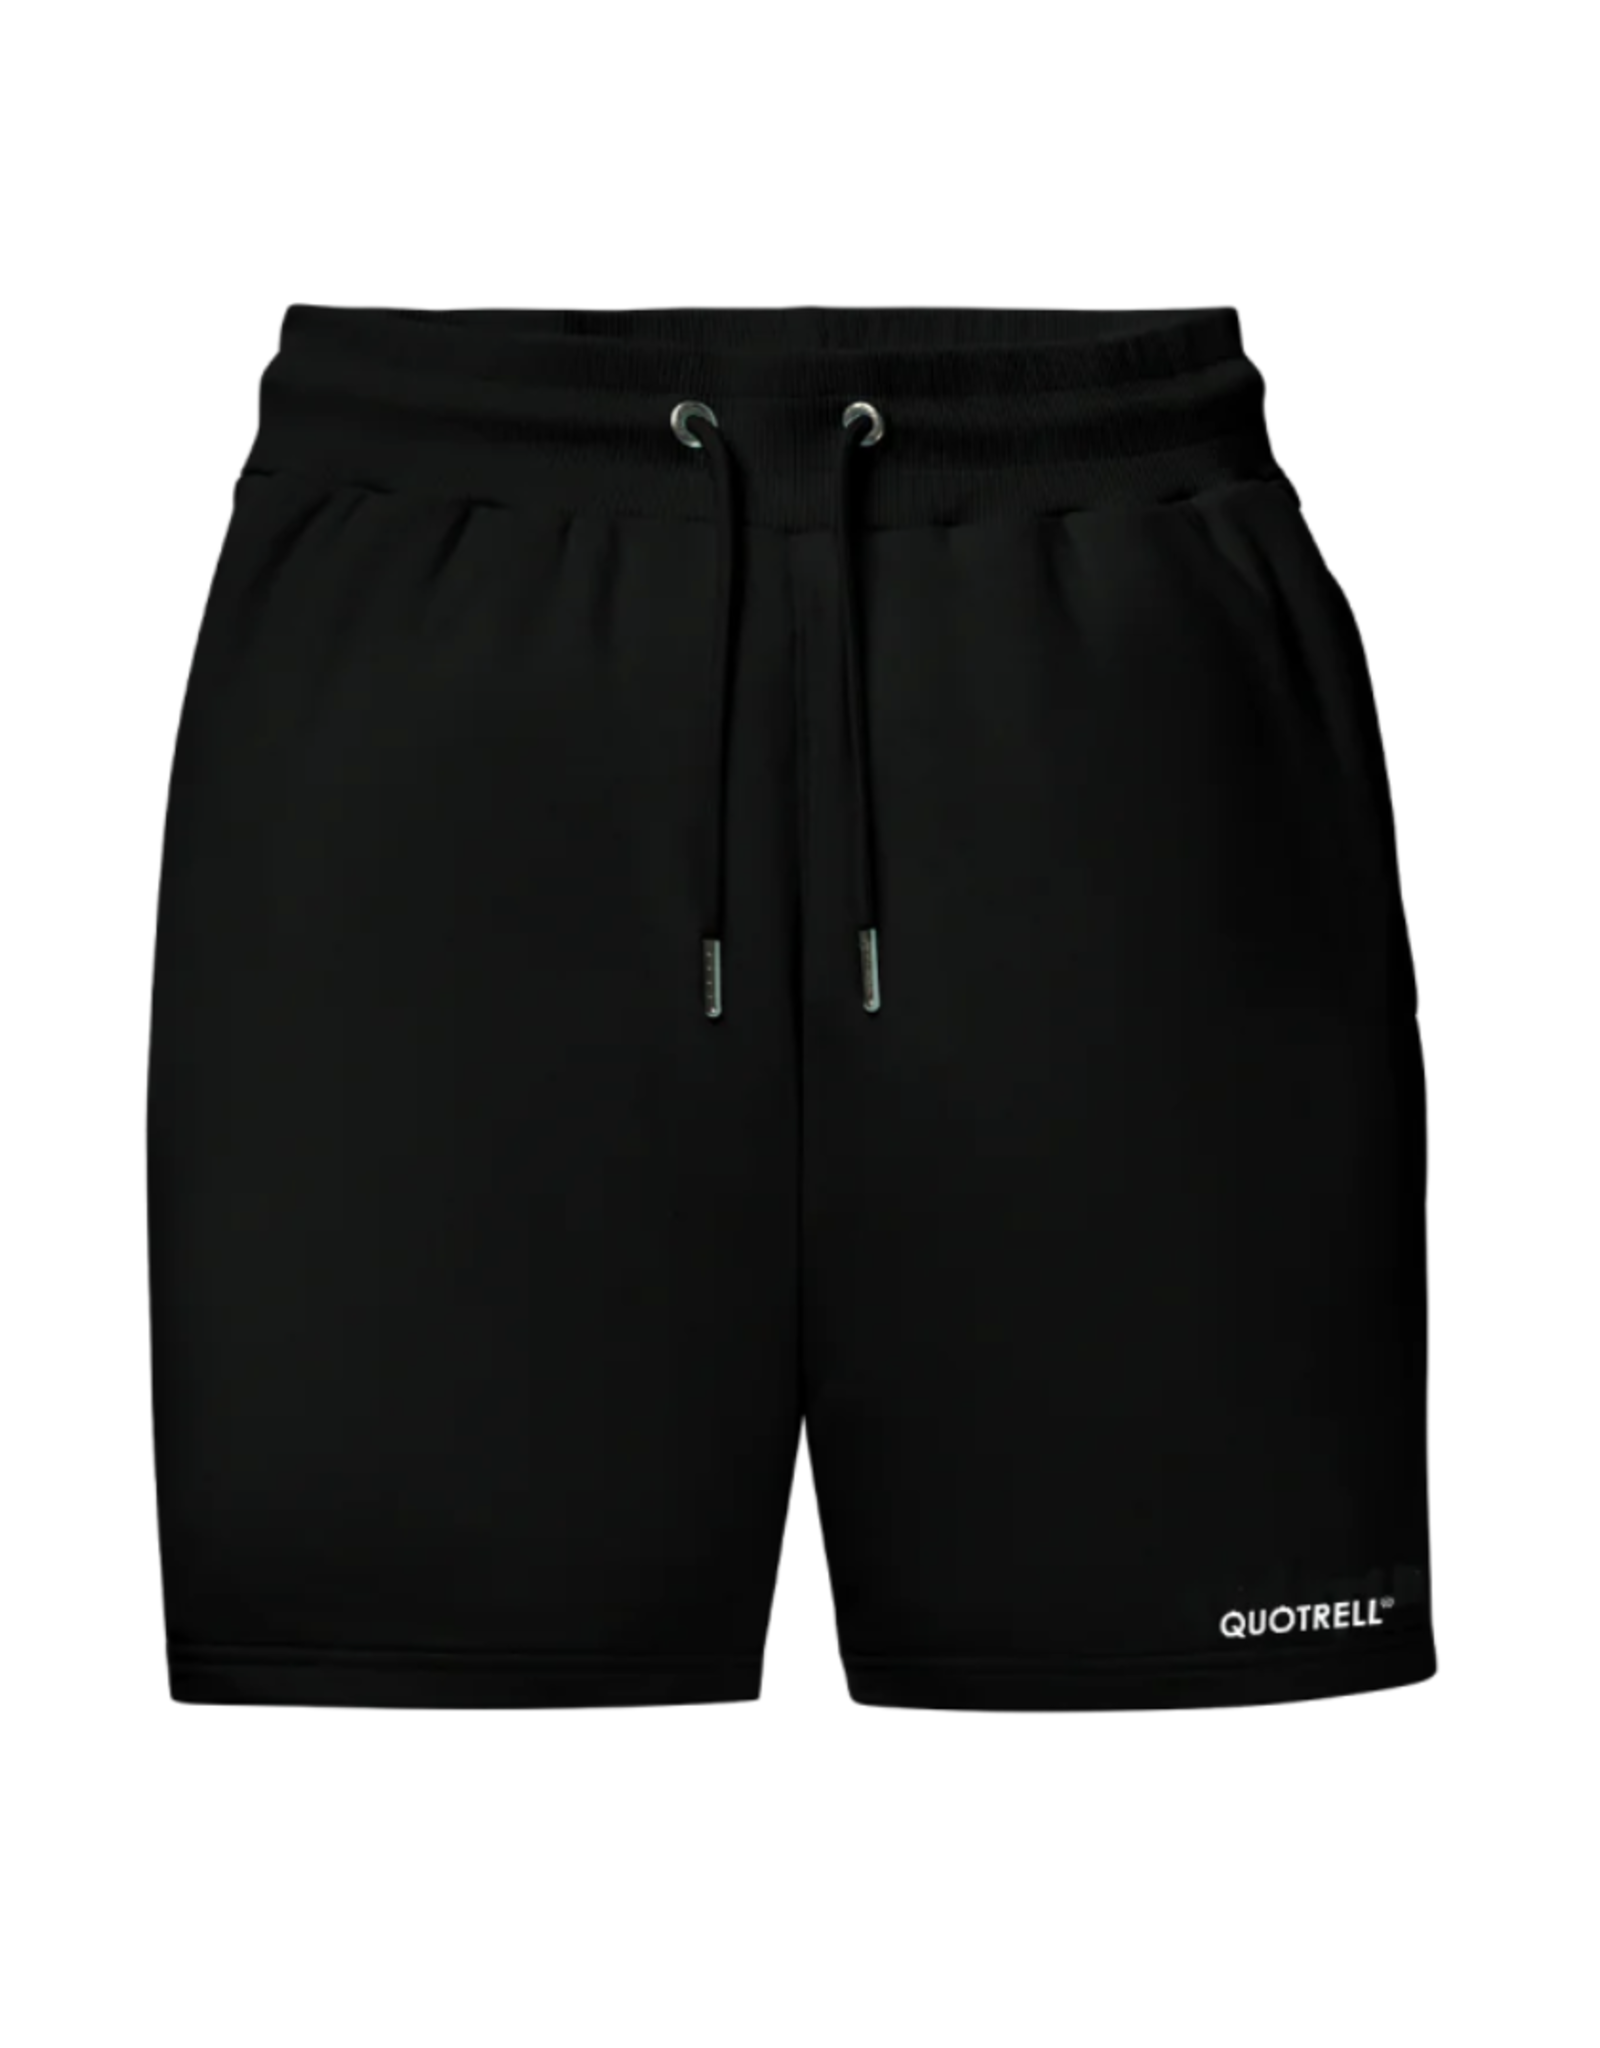 Quotrell Basic Shorts